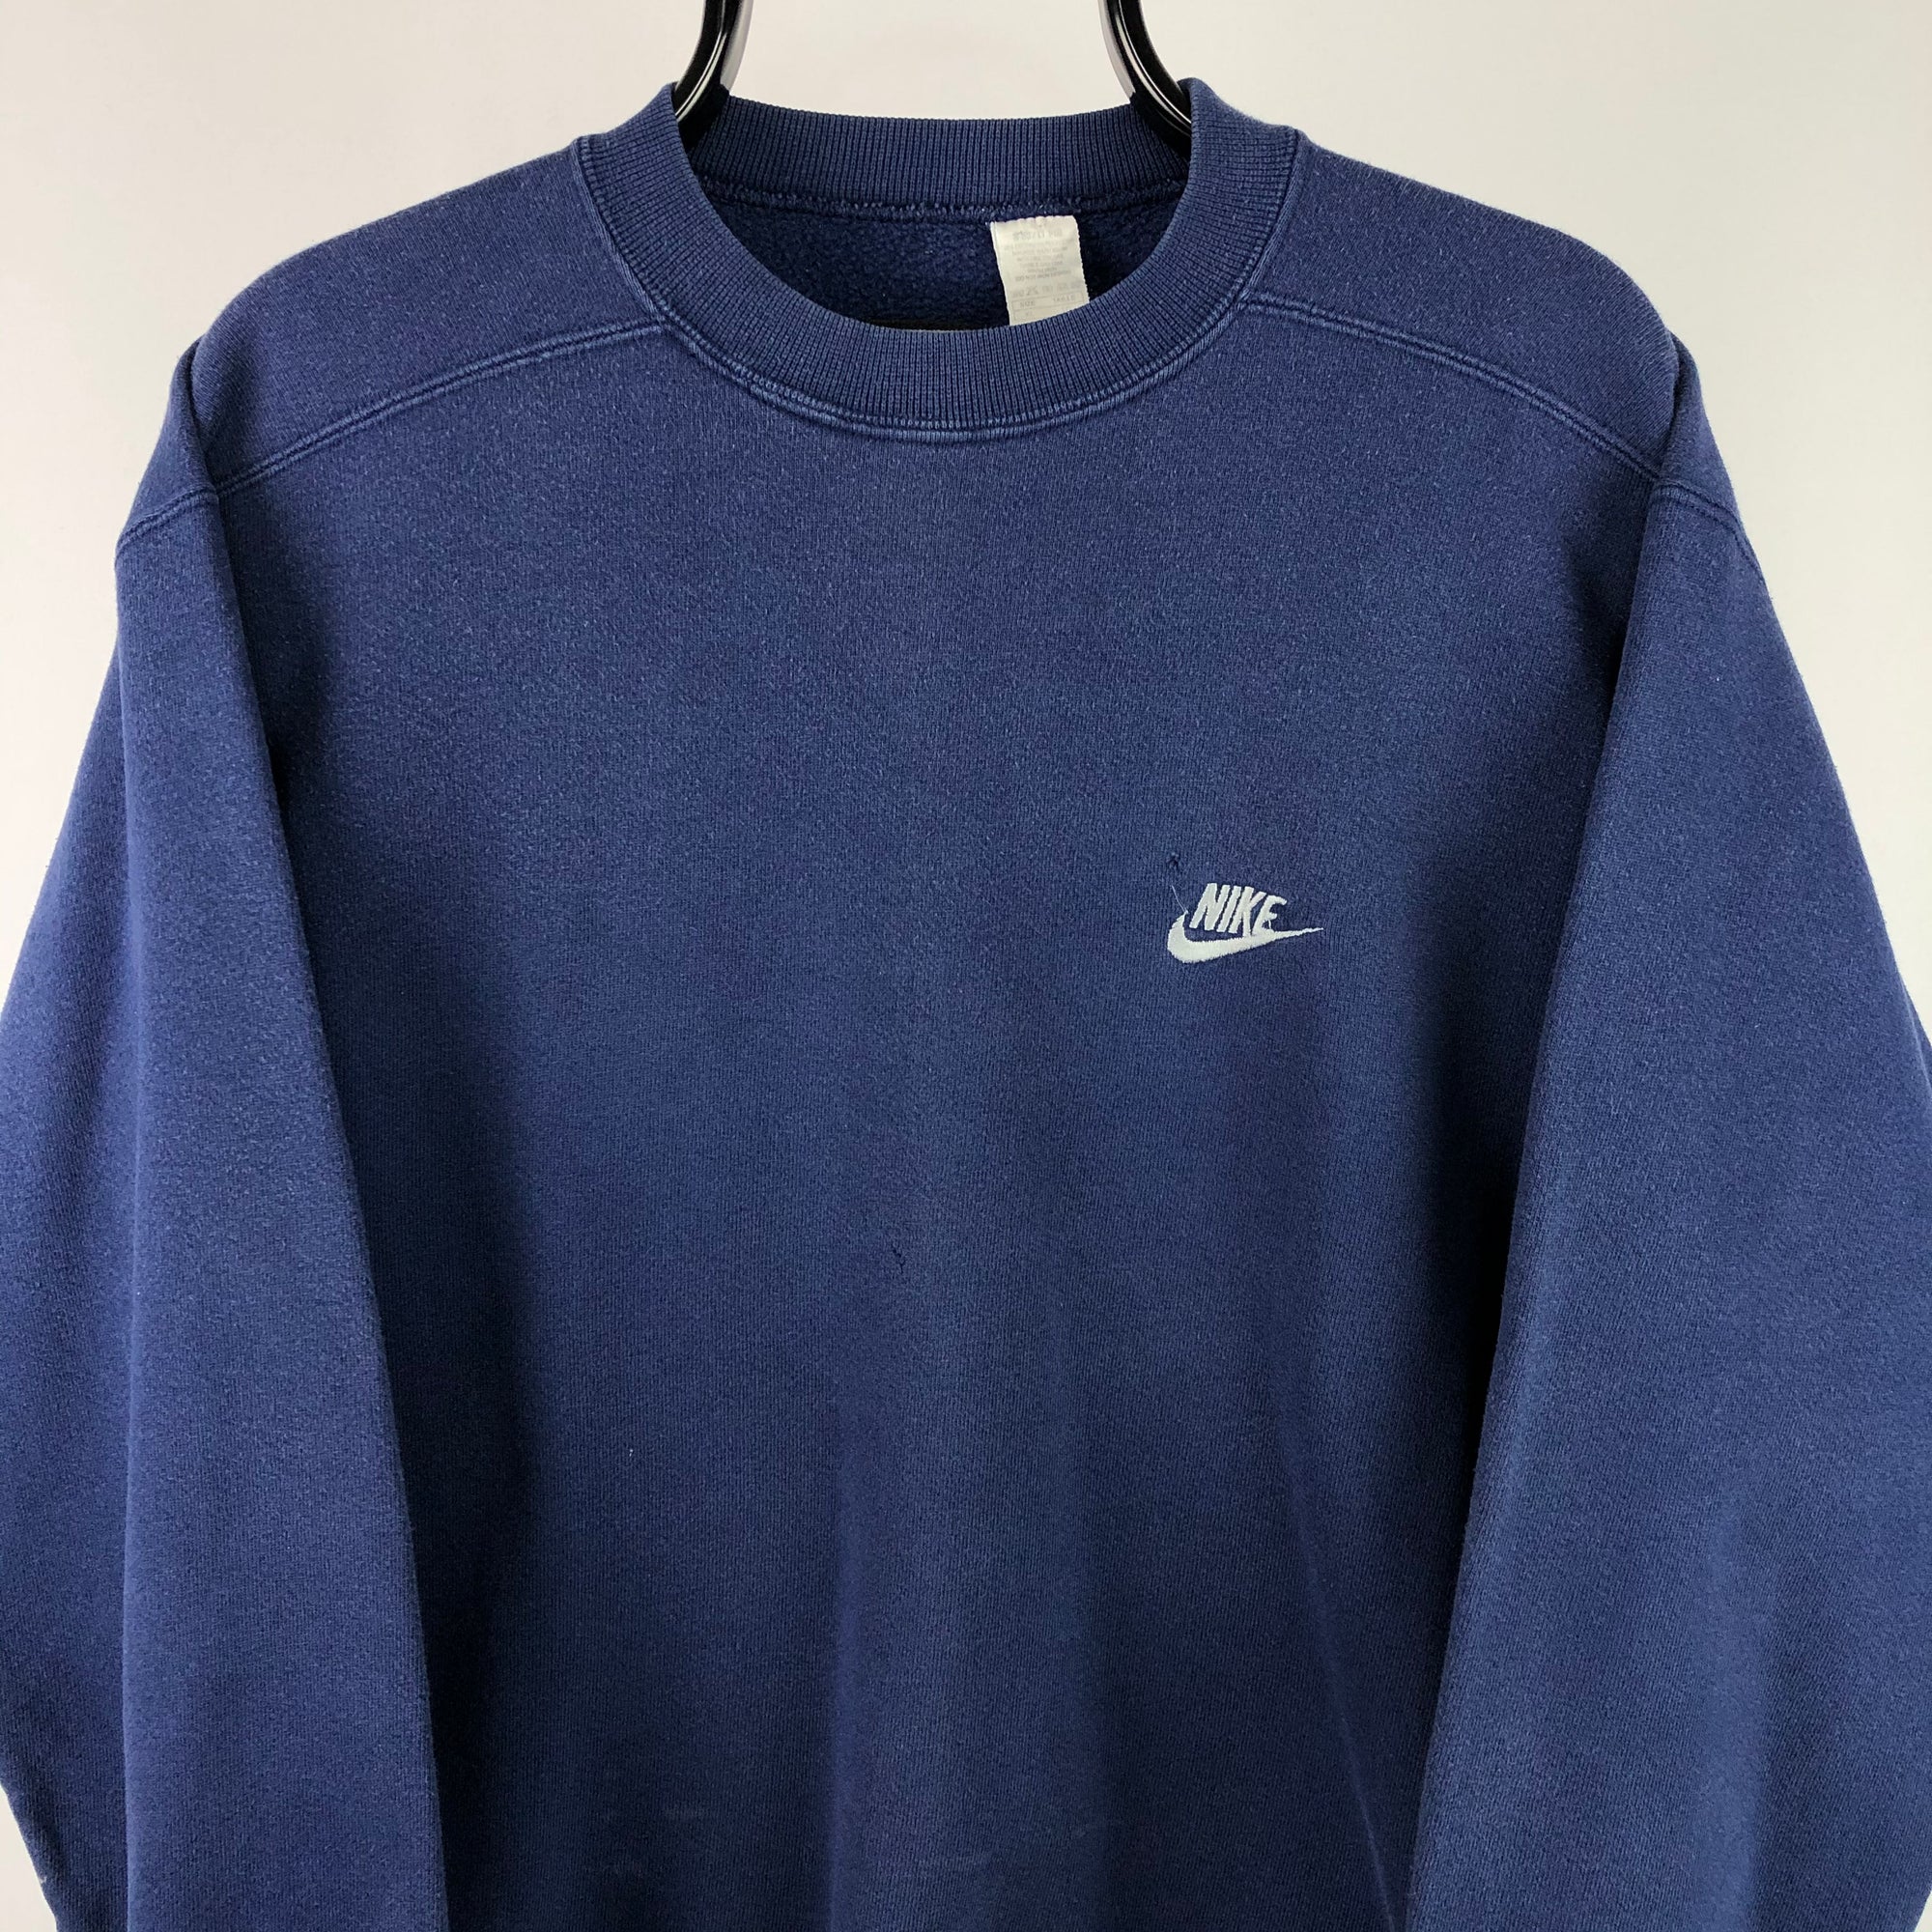 Vintage Nike Embroidered Small Logo Sweatshirt in Navy - Men's Medium/Women's Large